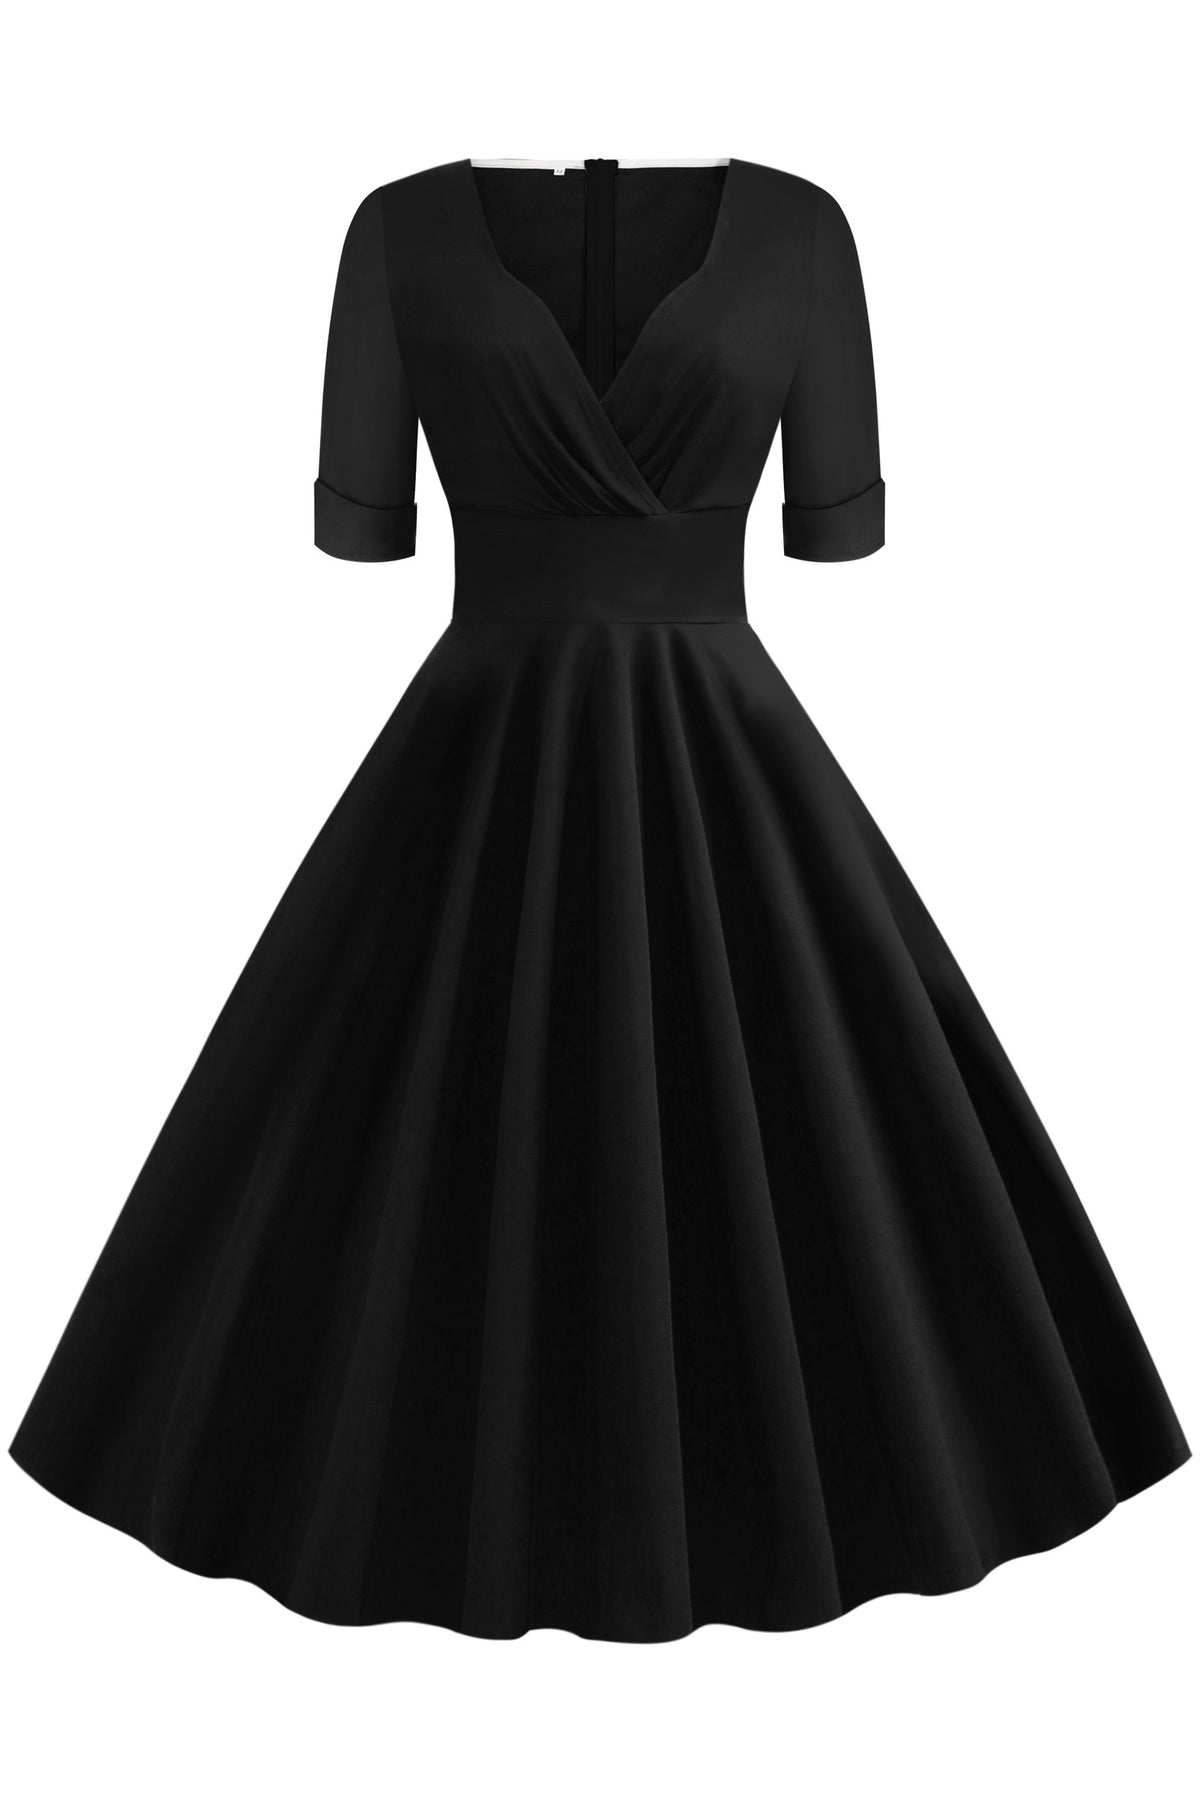 Black Surplice A-line Short Sleeves Vintage Dress